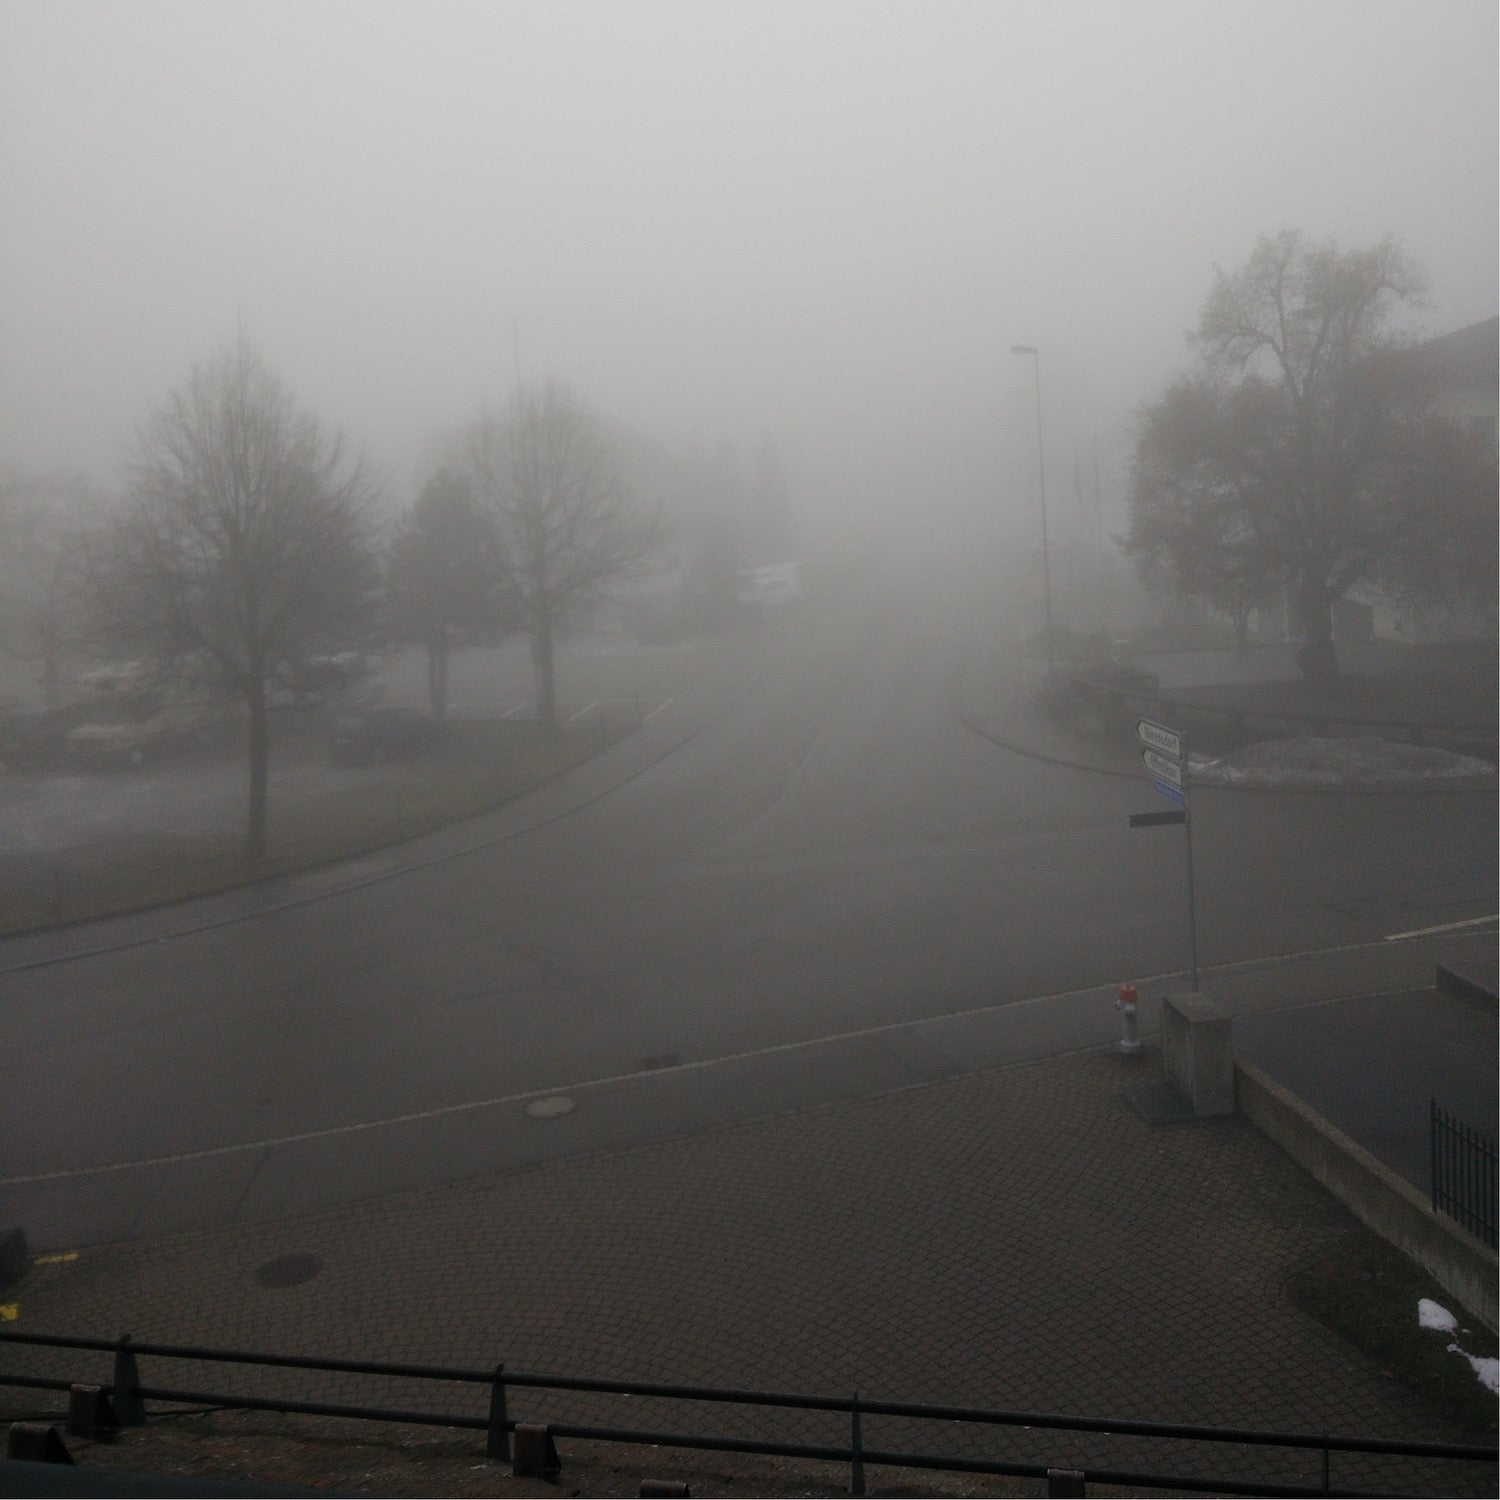 foggy winter